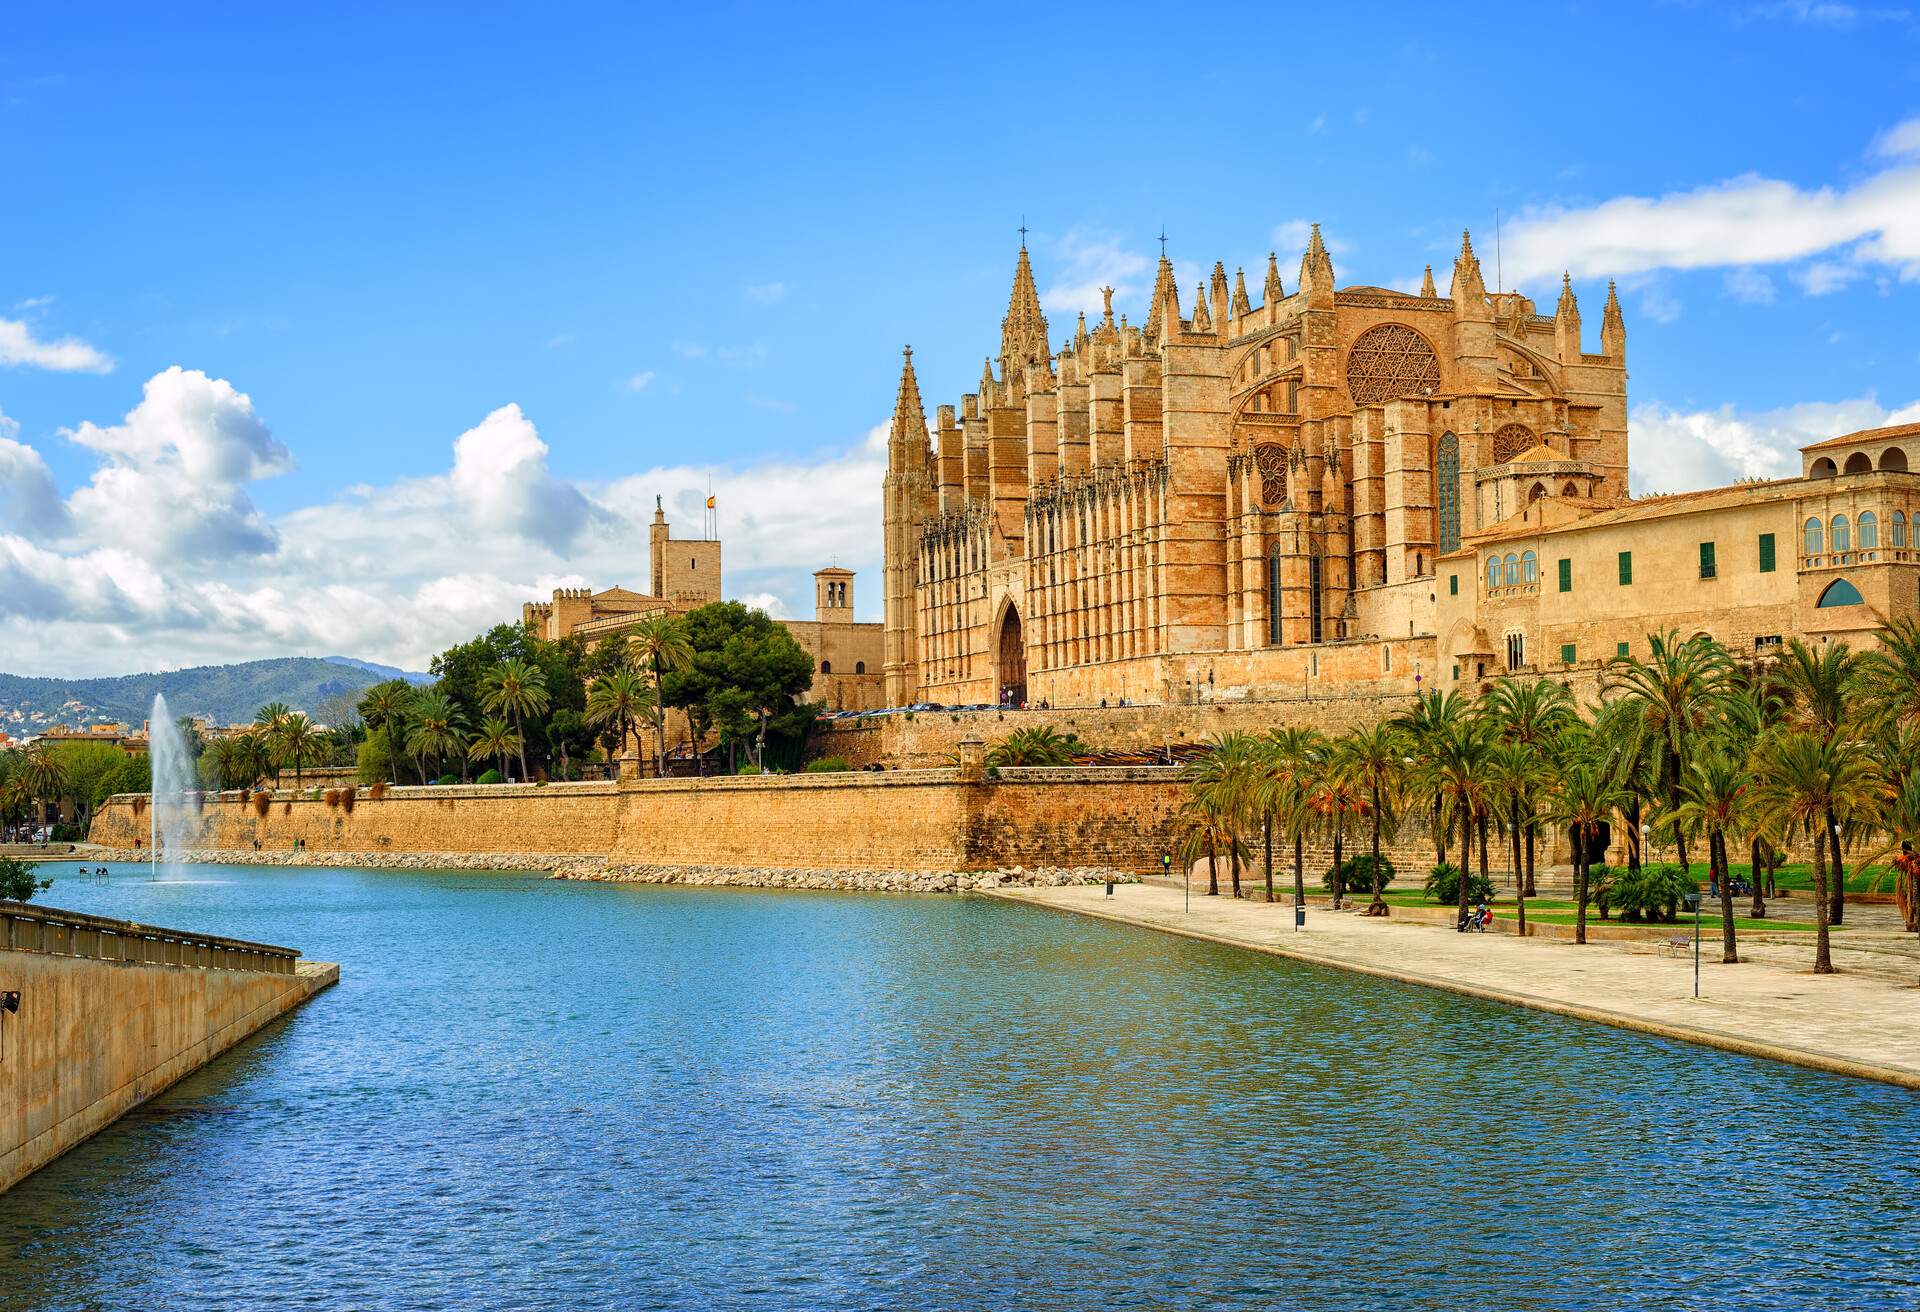 La Seu, the gothic medieval cathedral of Palma de Mallorca, Spain Cheap holiday destinations 2023